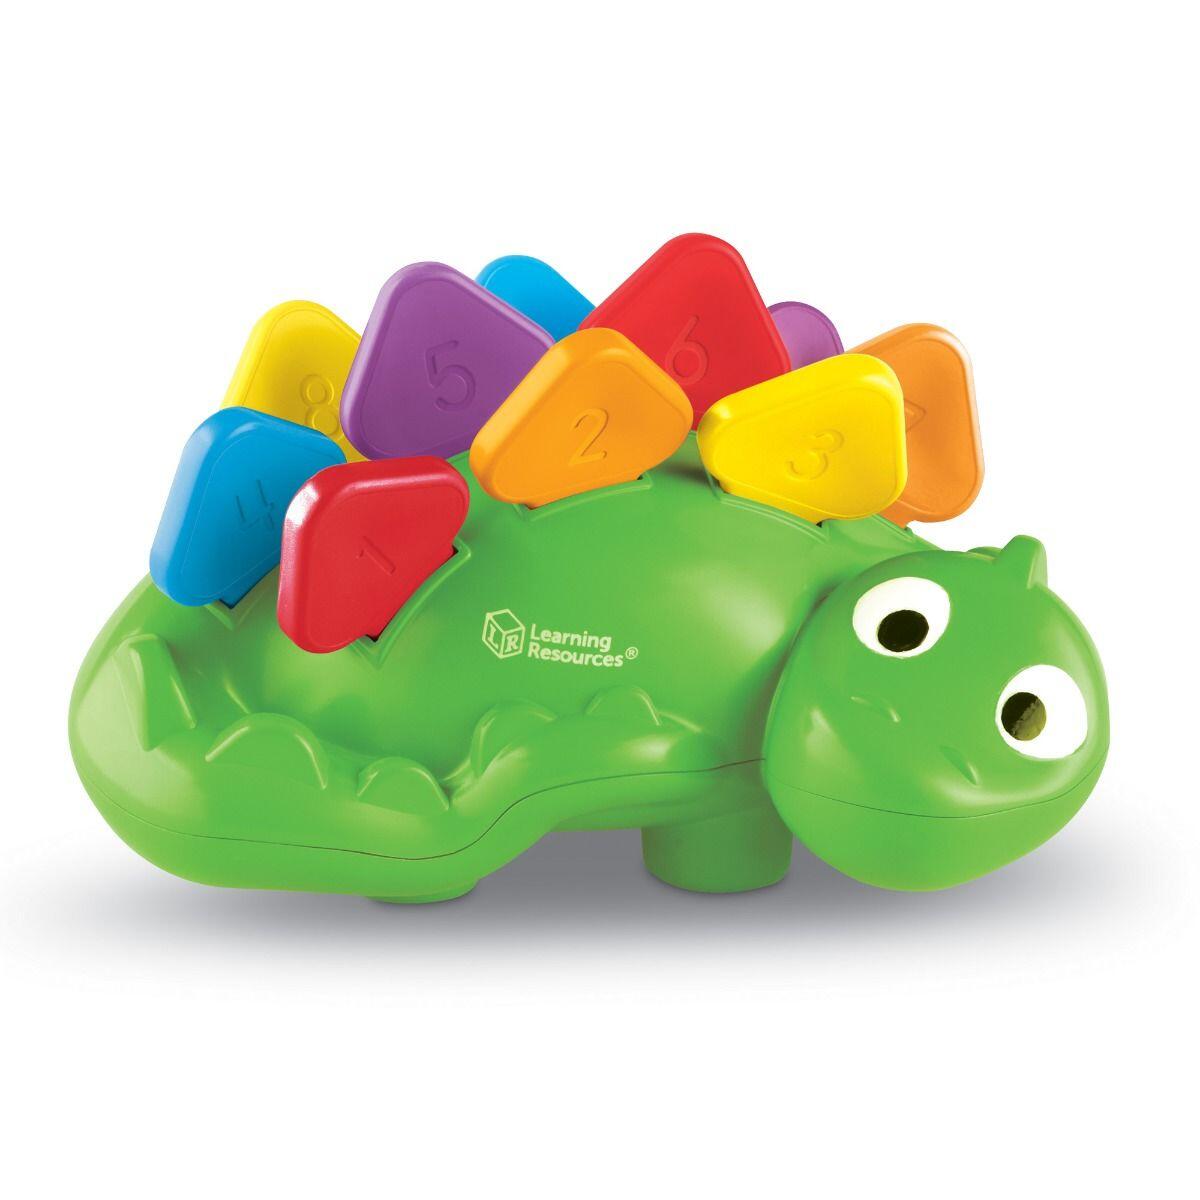 Joc de potrivire - Dinozaurul Steggy PlayLearn Toys